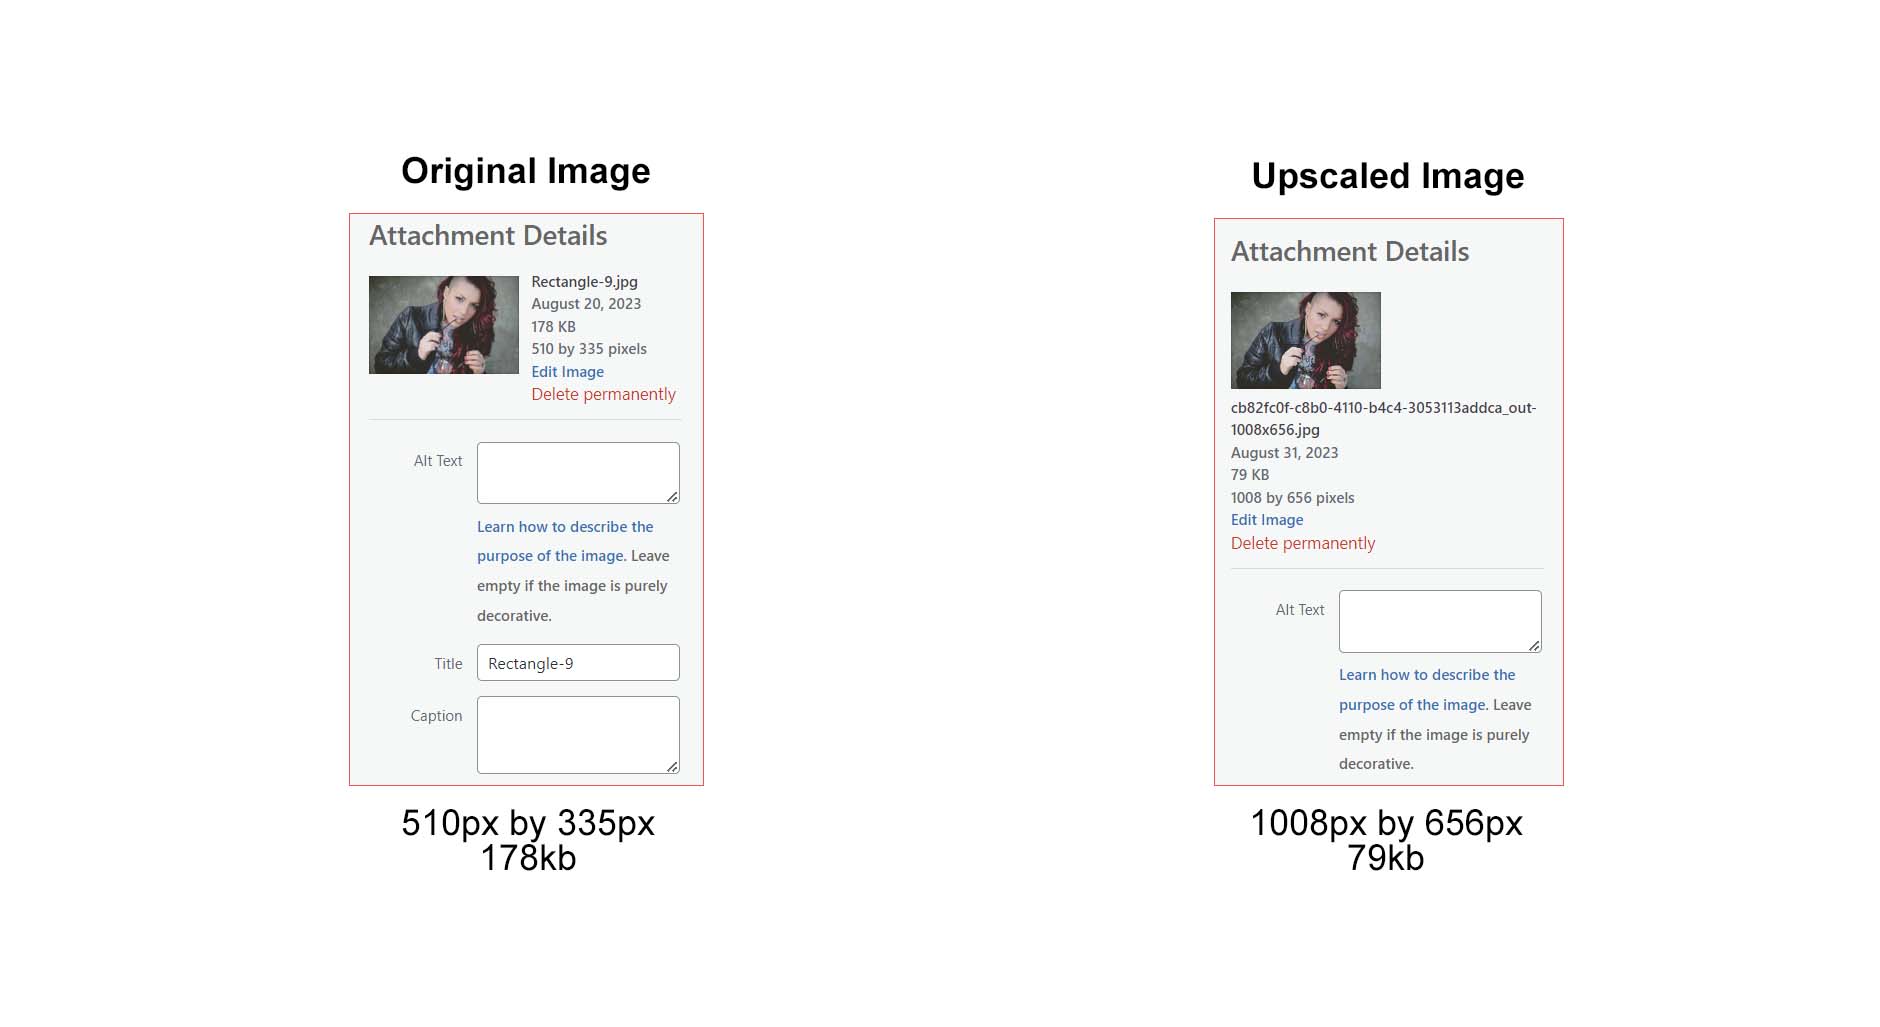 Comparing Image statistics of upscaled and originally upscaled images